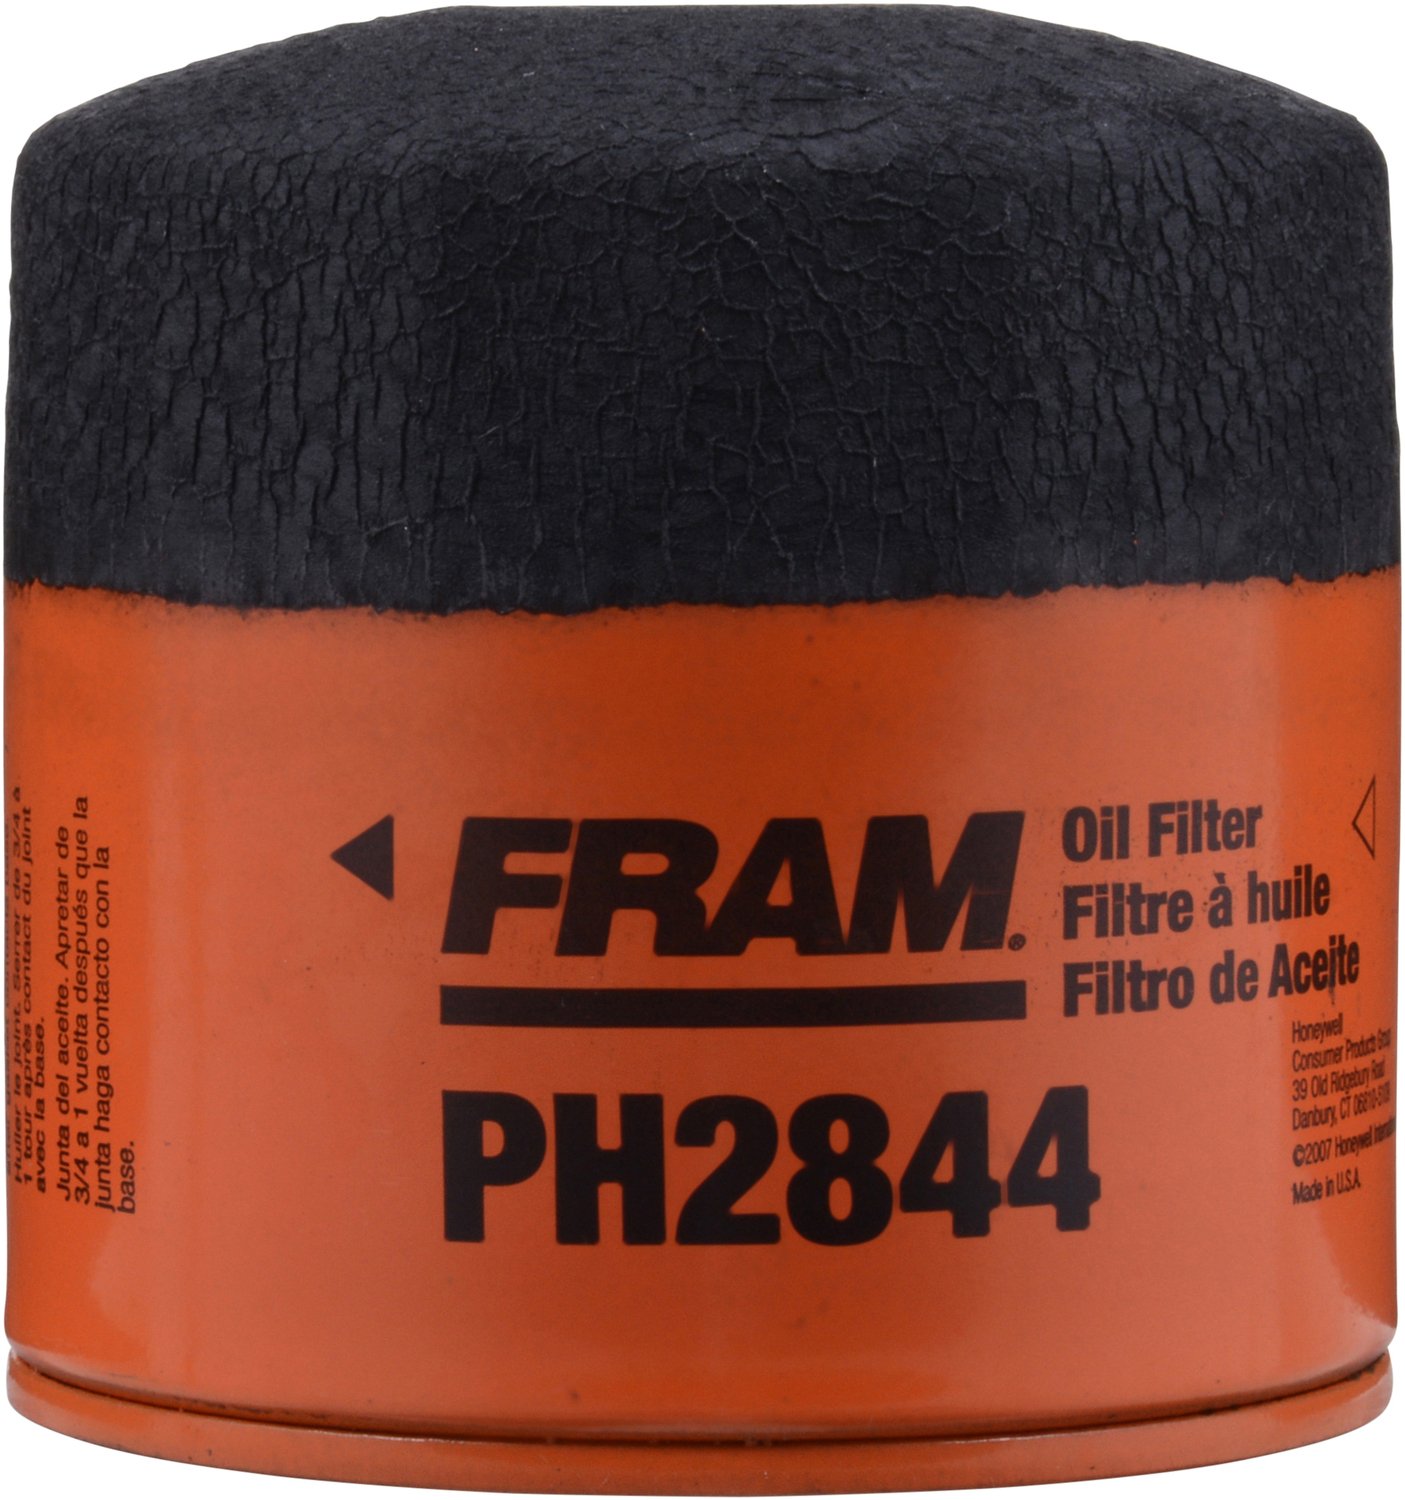 Fram Extra Guard PH2844 Ölfilter, 10 K Mile Change Intervall Spin-On von Fram